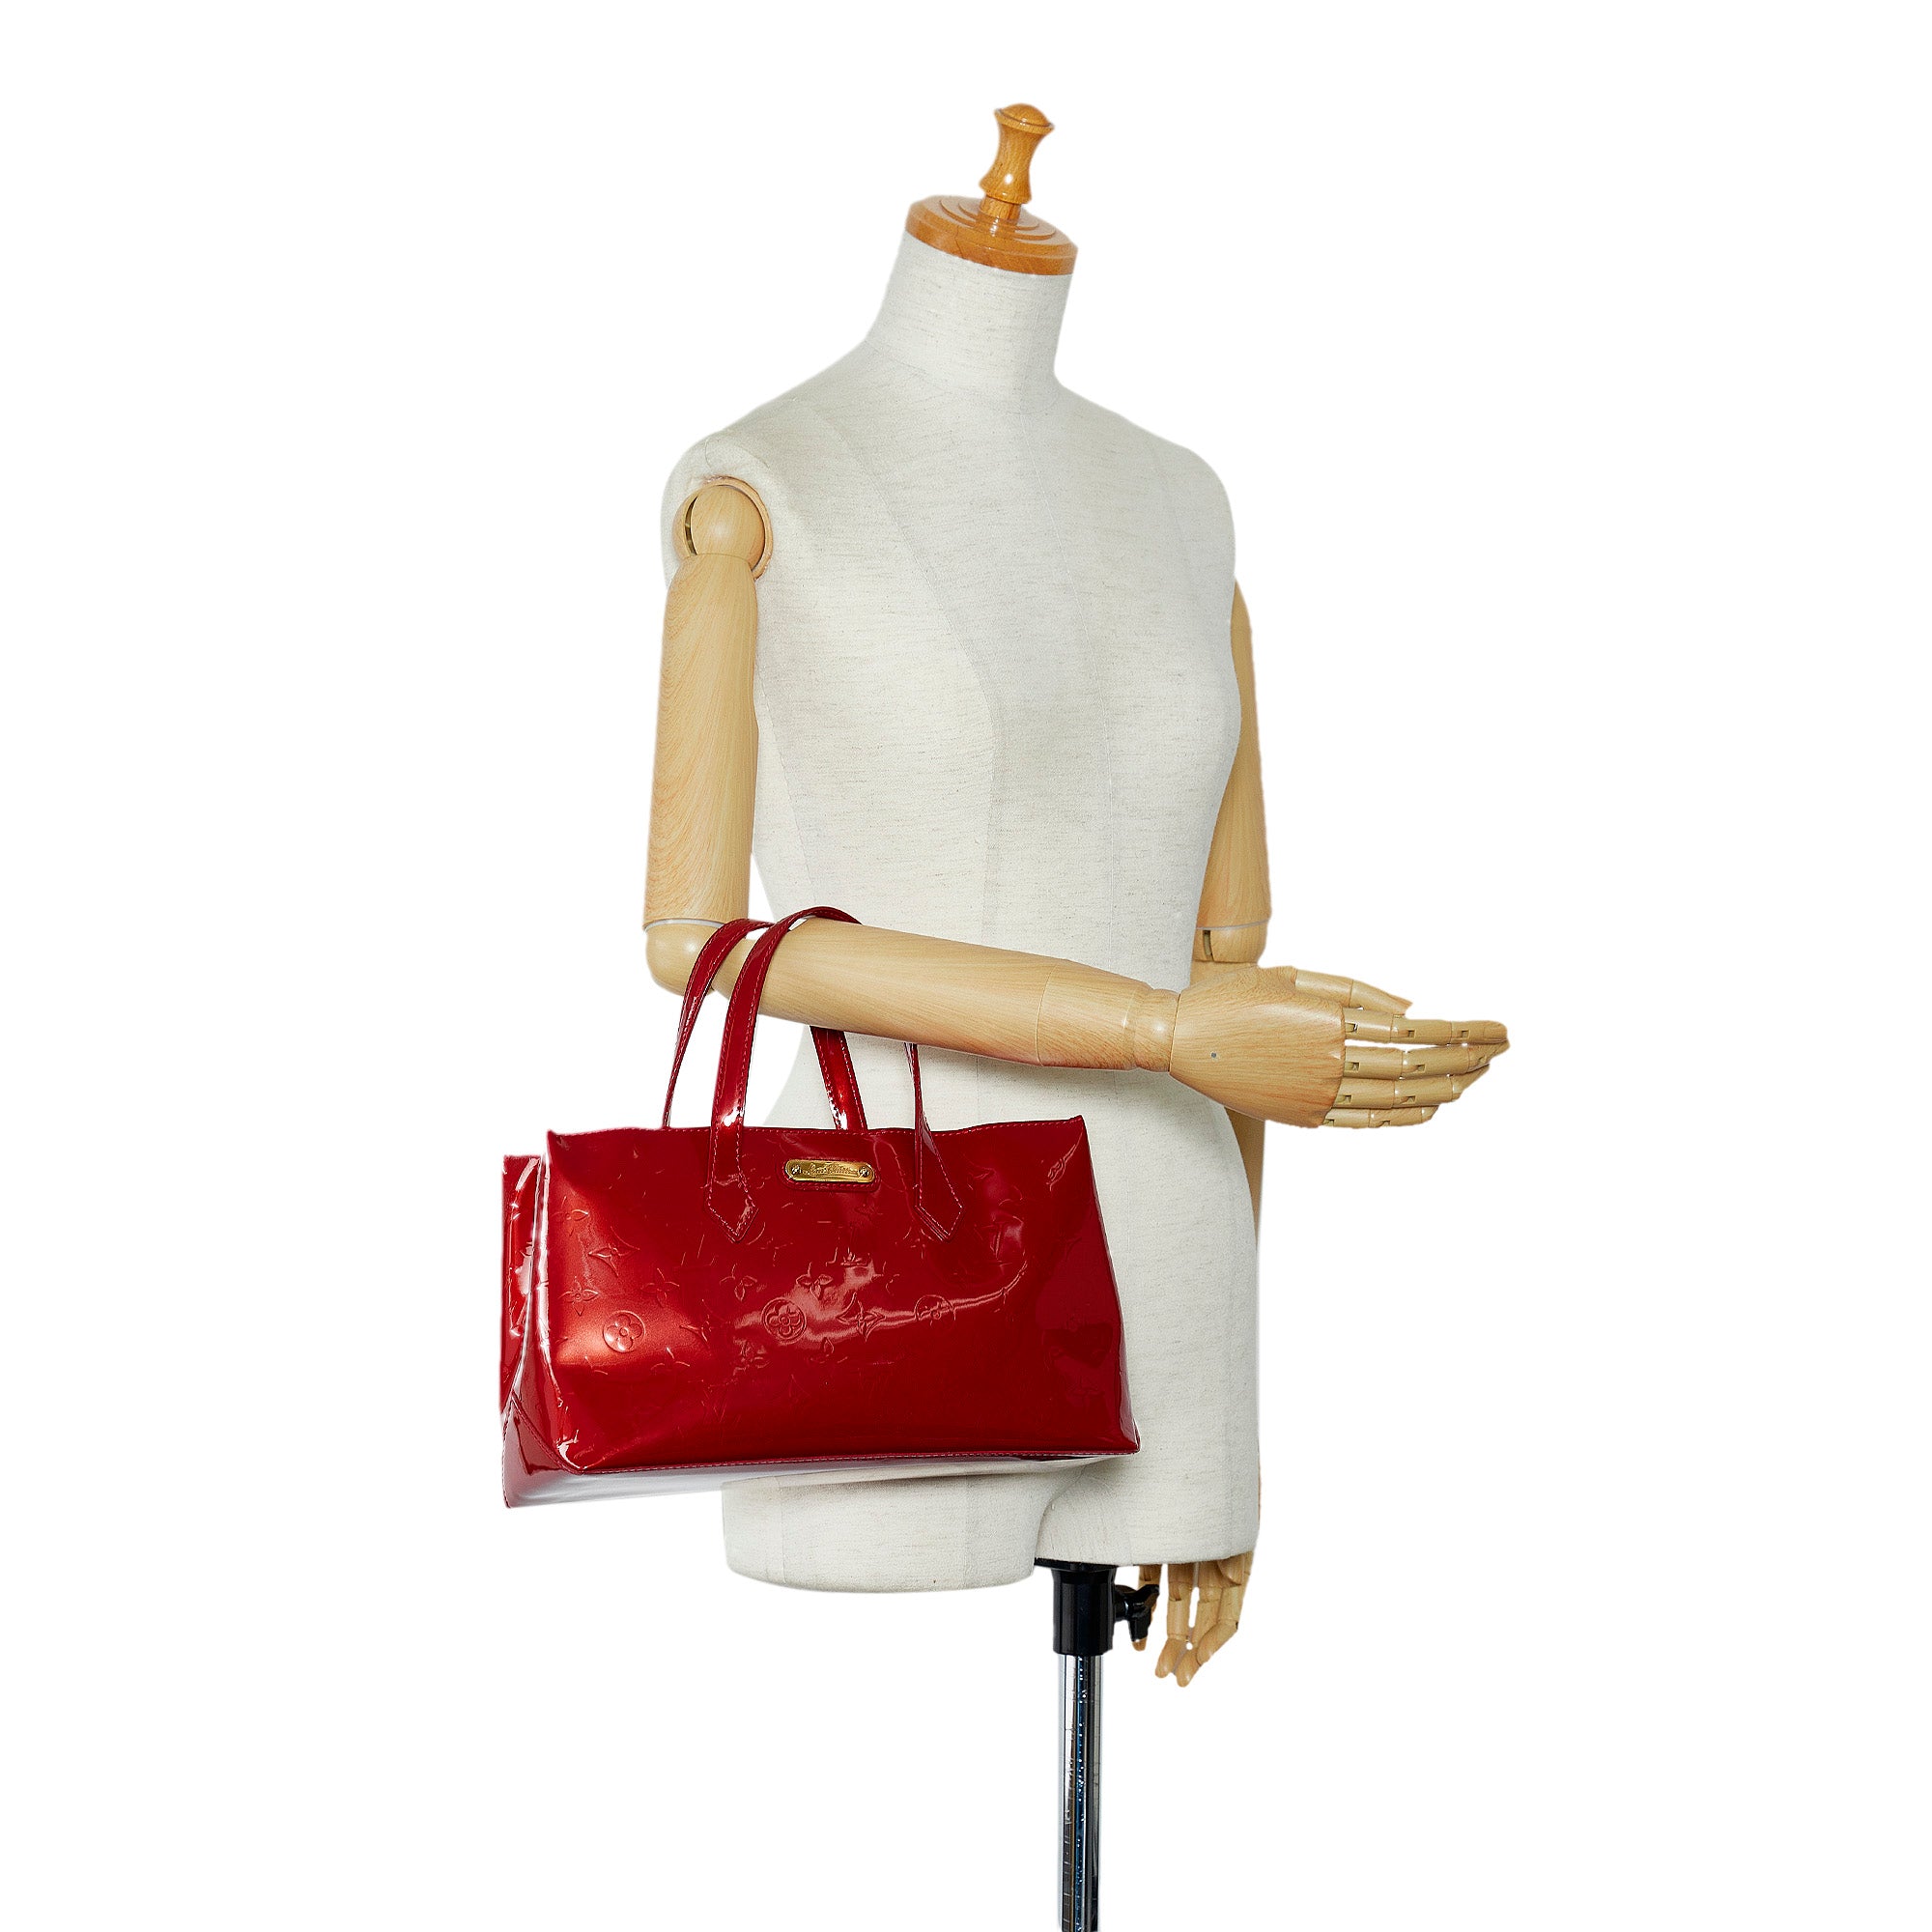 Red Louis Vuitton Monogram Vernis Wilshire PM Handbag